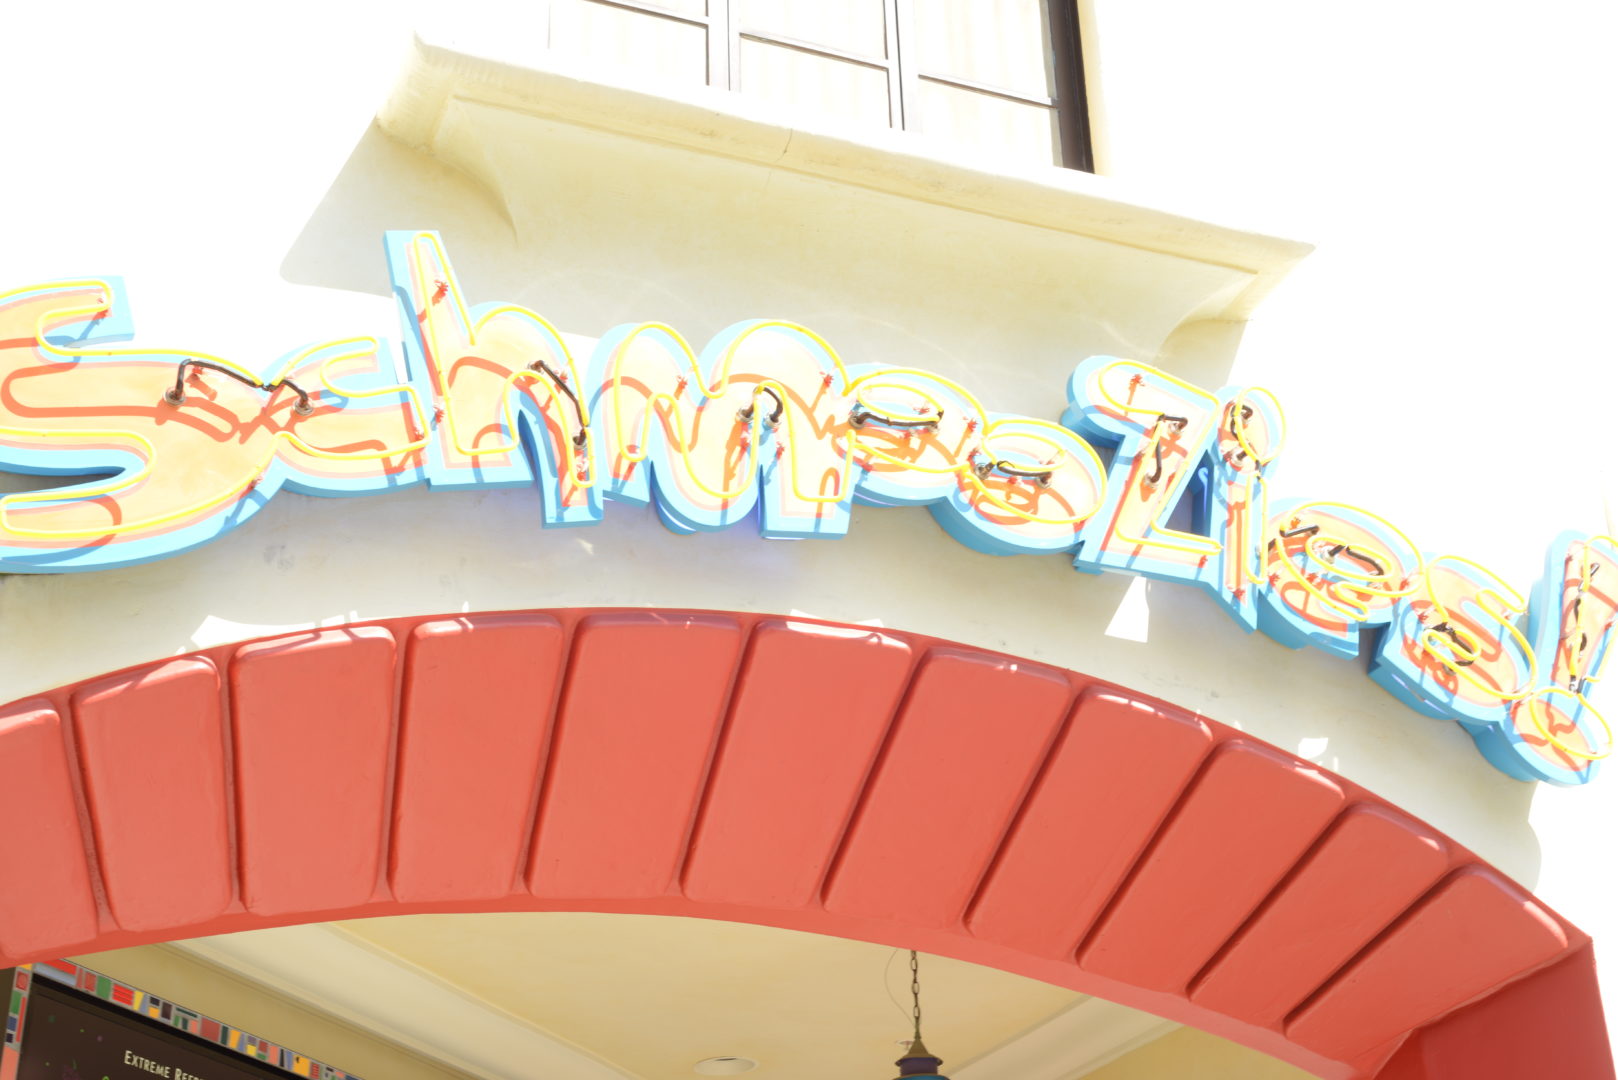 Schmoozie's Sign at Disneyland's California Adventure